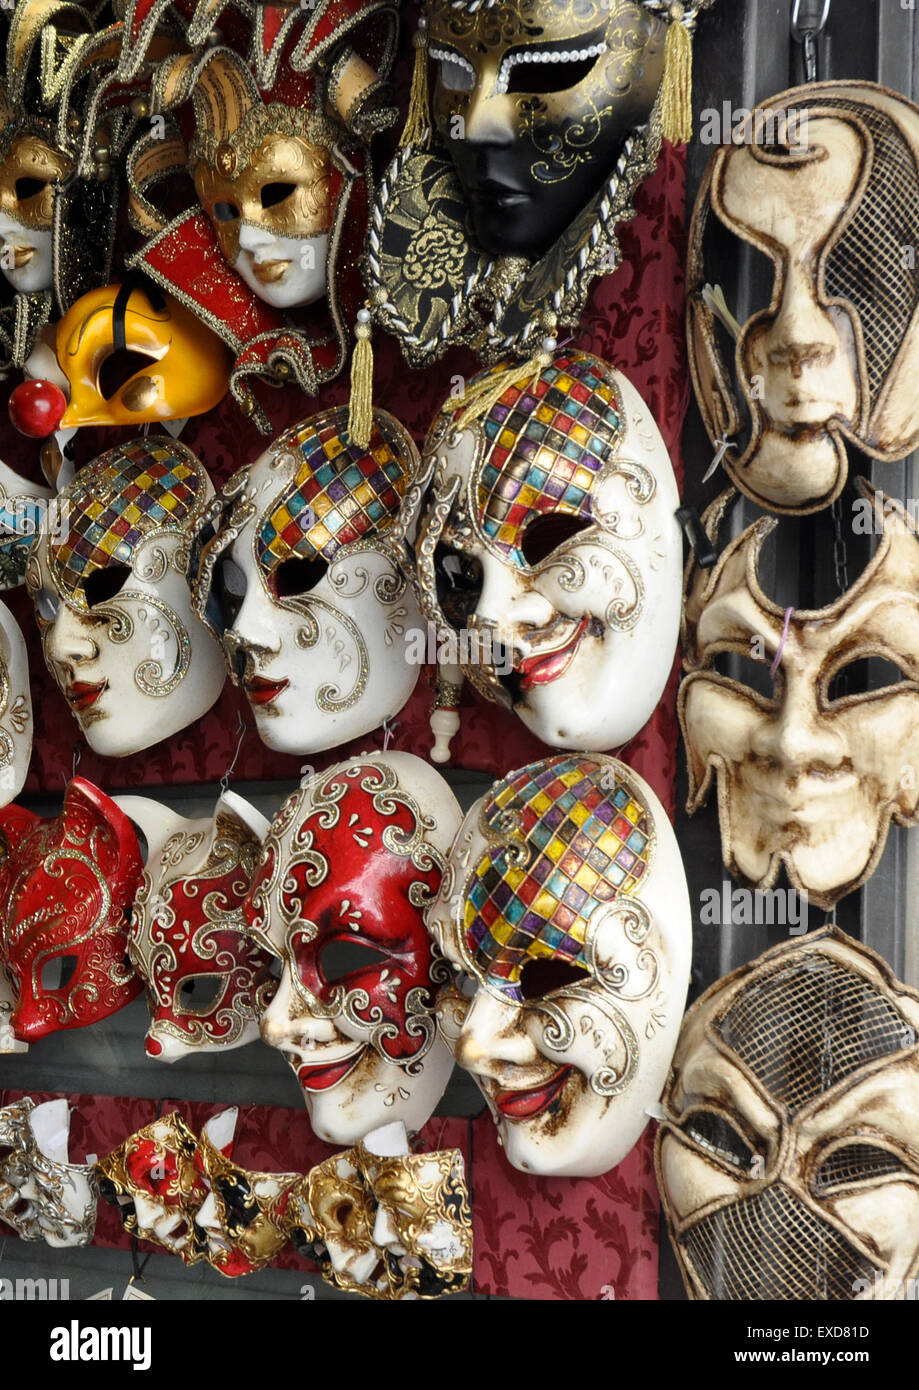 Italy - Venice - Cannaregio region - street market colourful display carnival masks - full of mystery and intrigue Stock Photo